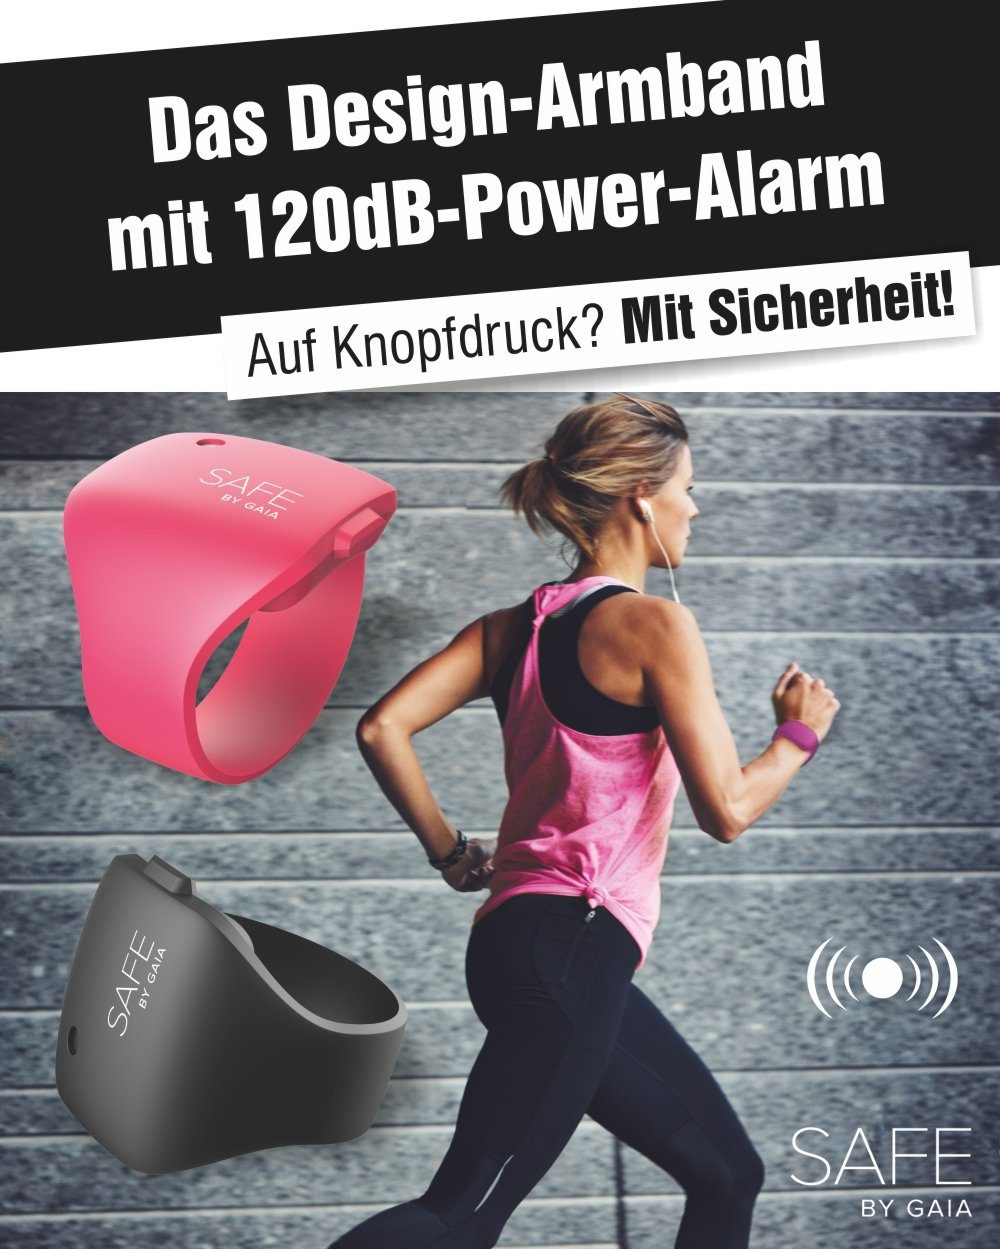 Alarm-Armband "SAFE by GAIA", Wearable, Sportuhr-Design, Sicherheit, 120dB Poweralarm